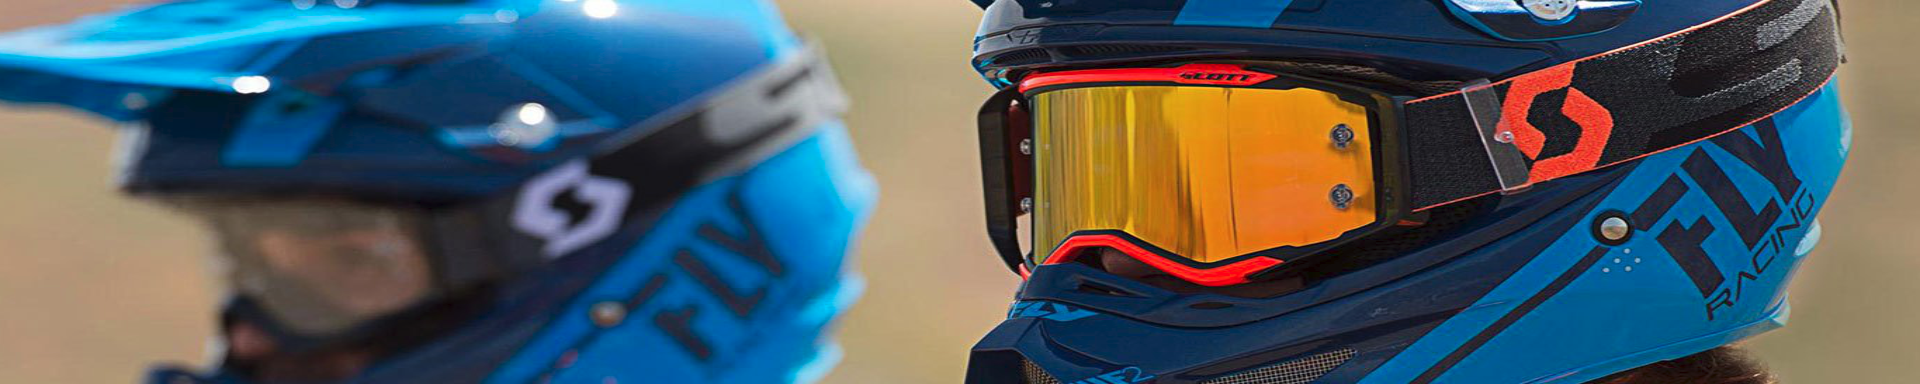 Helmets | MunroPowersports.com | Munro Industries mp-10080305